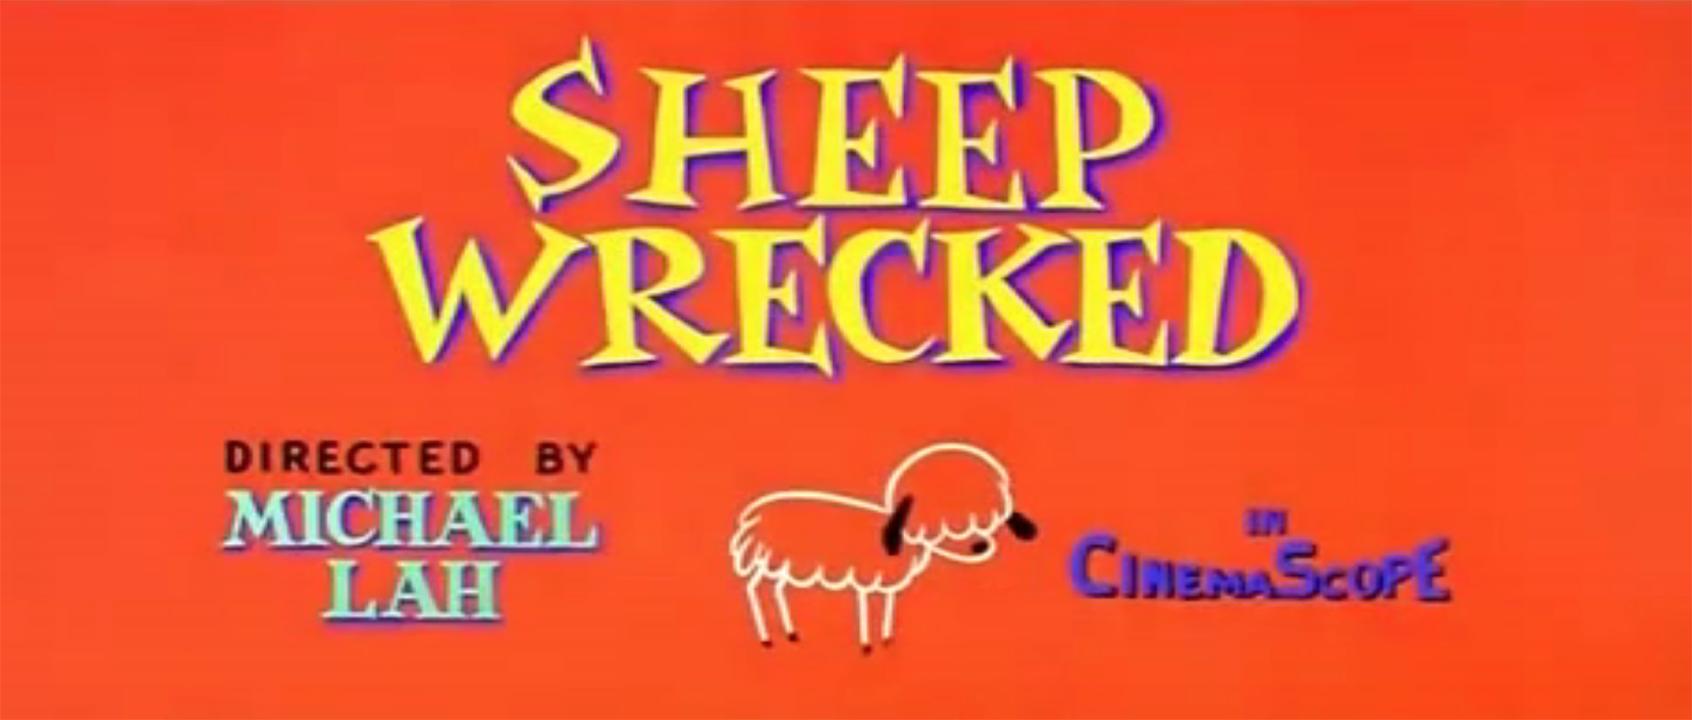 Sheep Wrecked